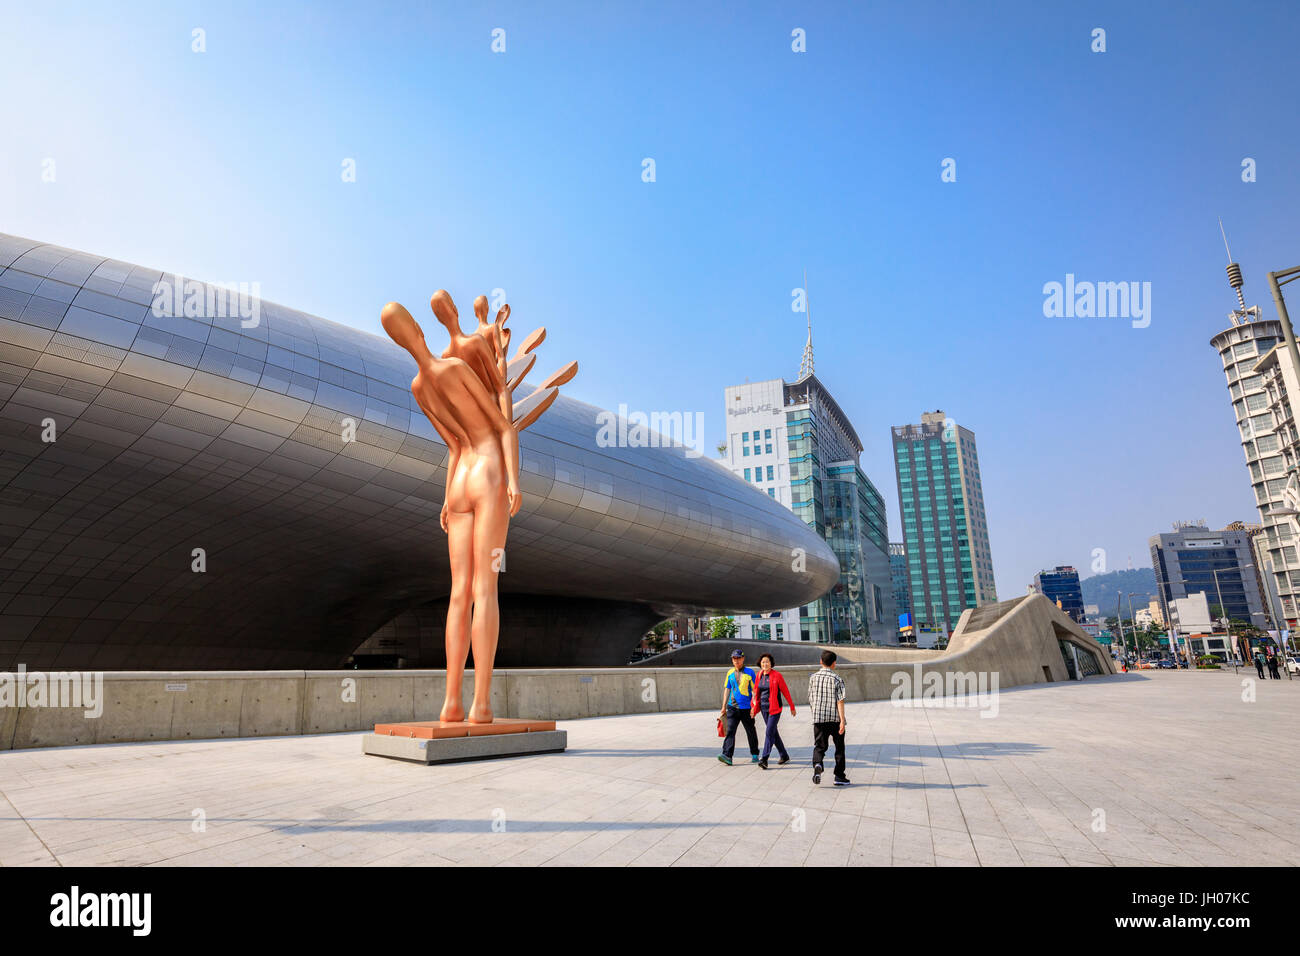 DDP, Dongdaemun Design Plaza on Jun 18, 2017 in Seoul, South Korea - Famous Landmark Stock Photo